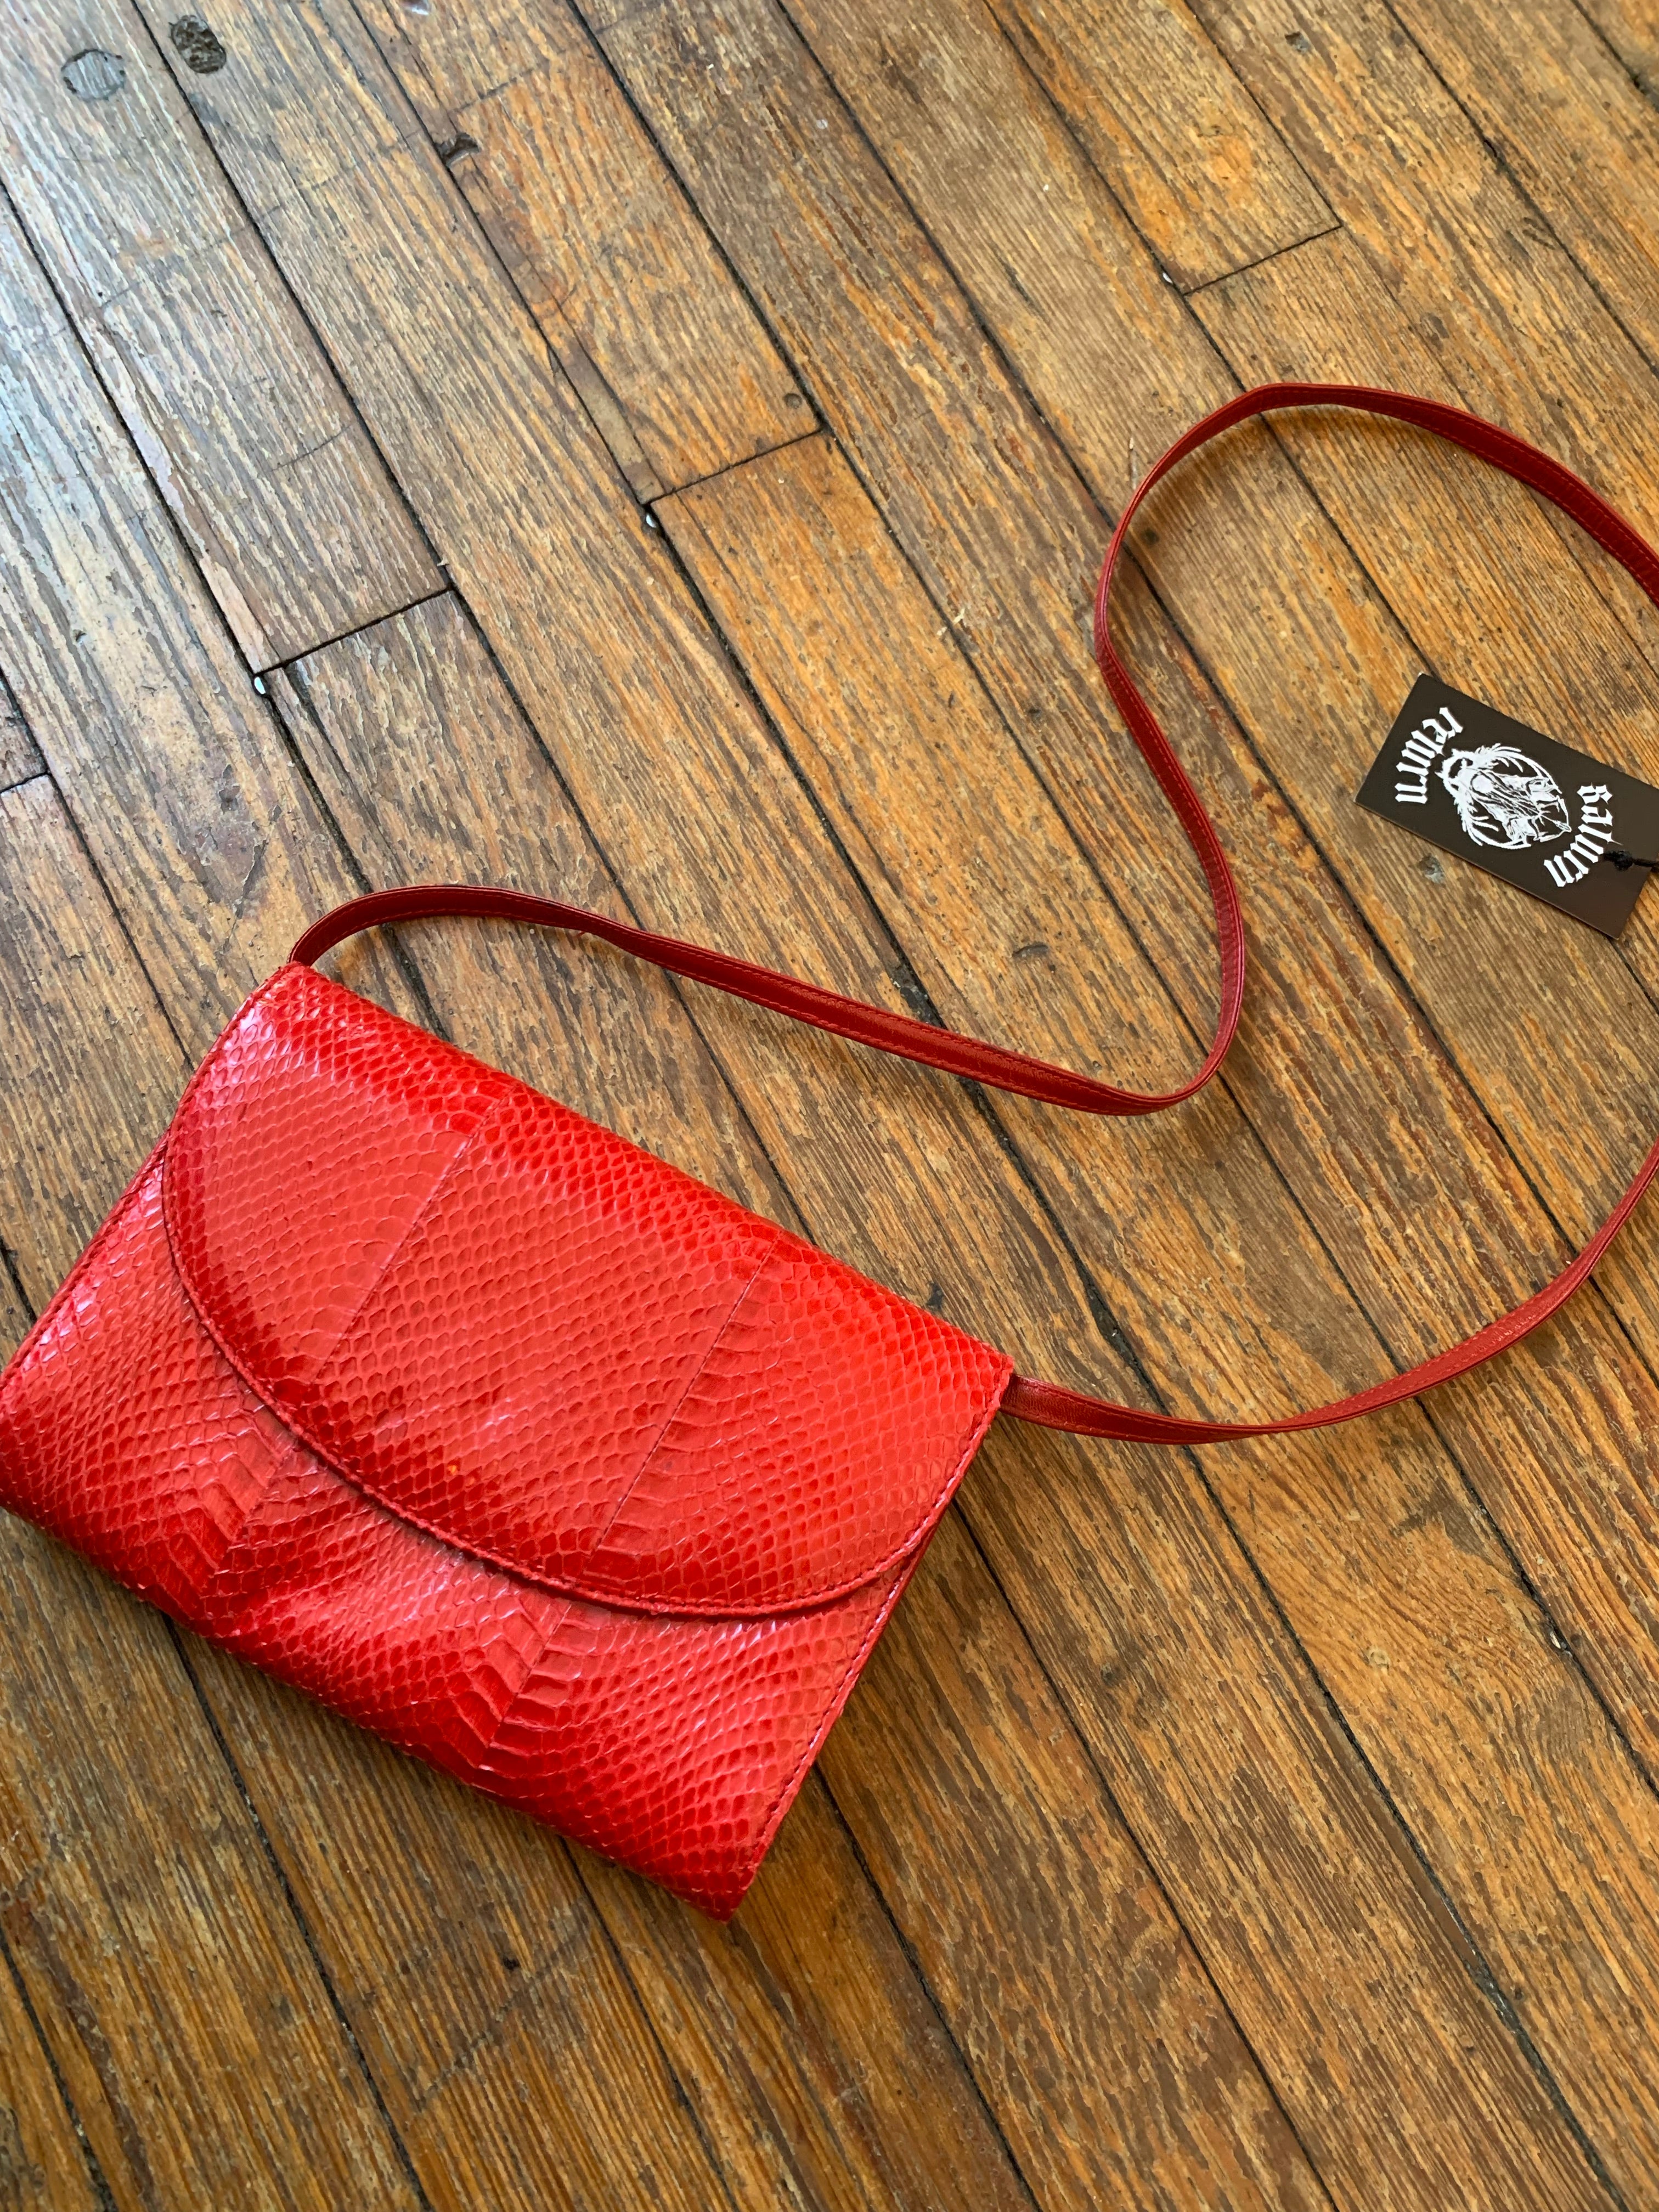 Giani Bernini, Bags, Giani Bernini Red Leather Shoulder Bag